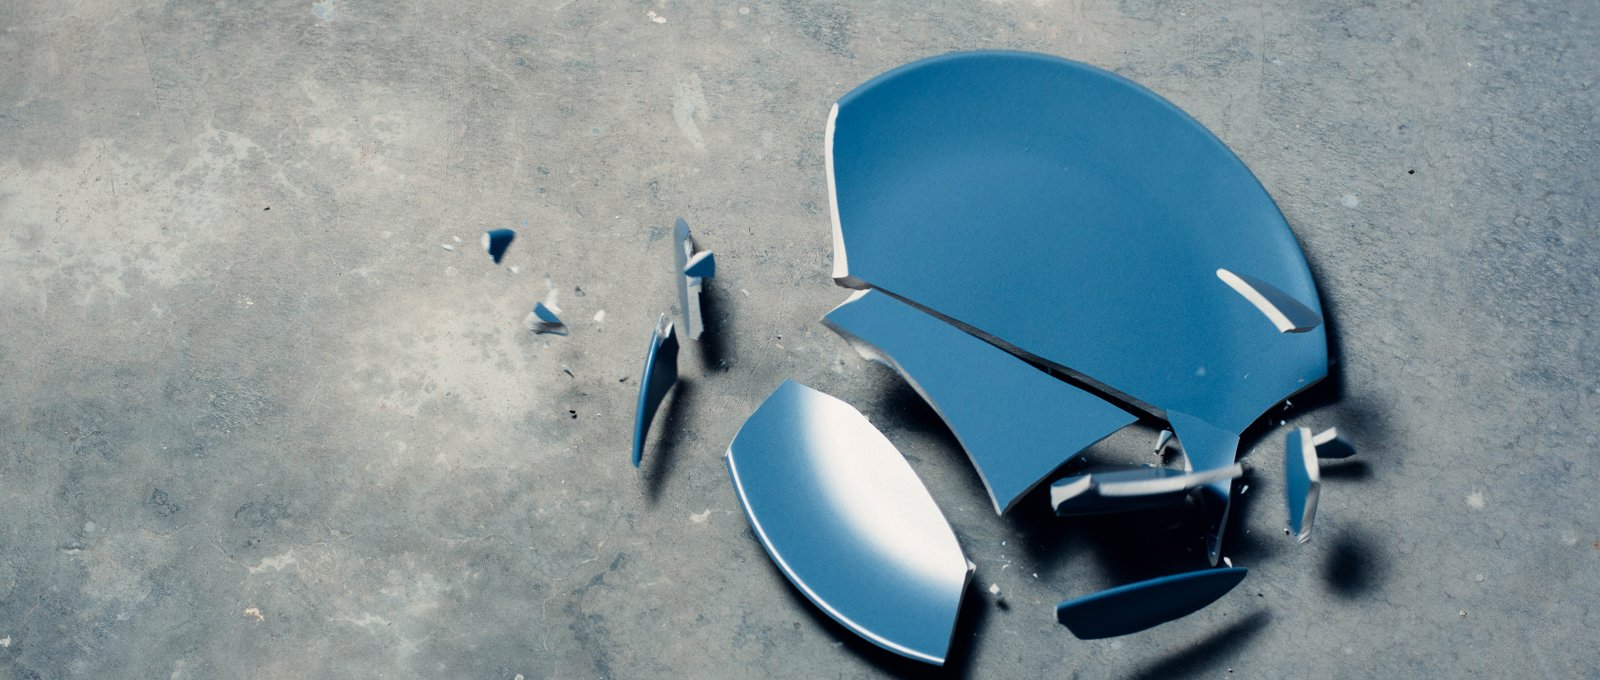 Blue ceramic plate broken on a grey concrete floor